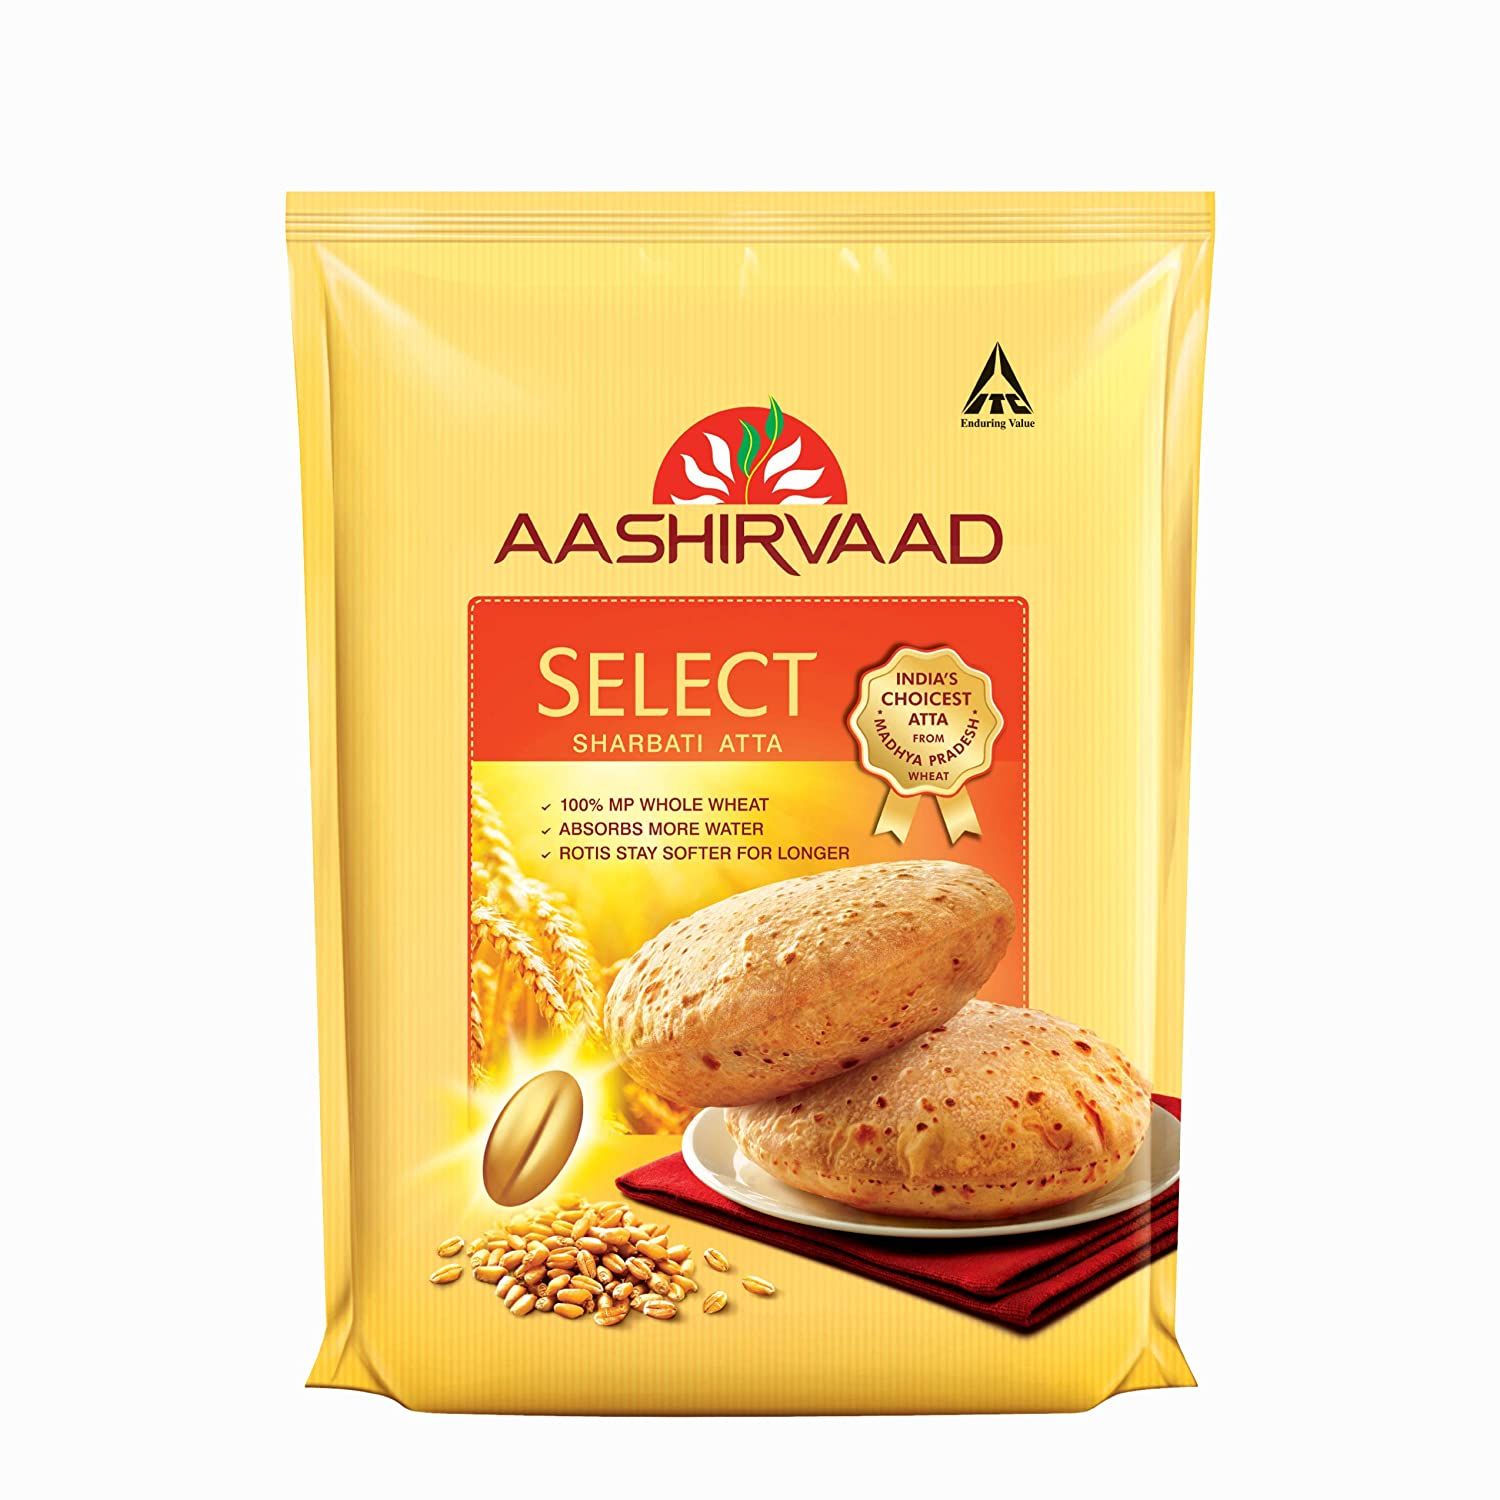 Aashirwad Select Premium Sharbati Atta Image